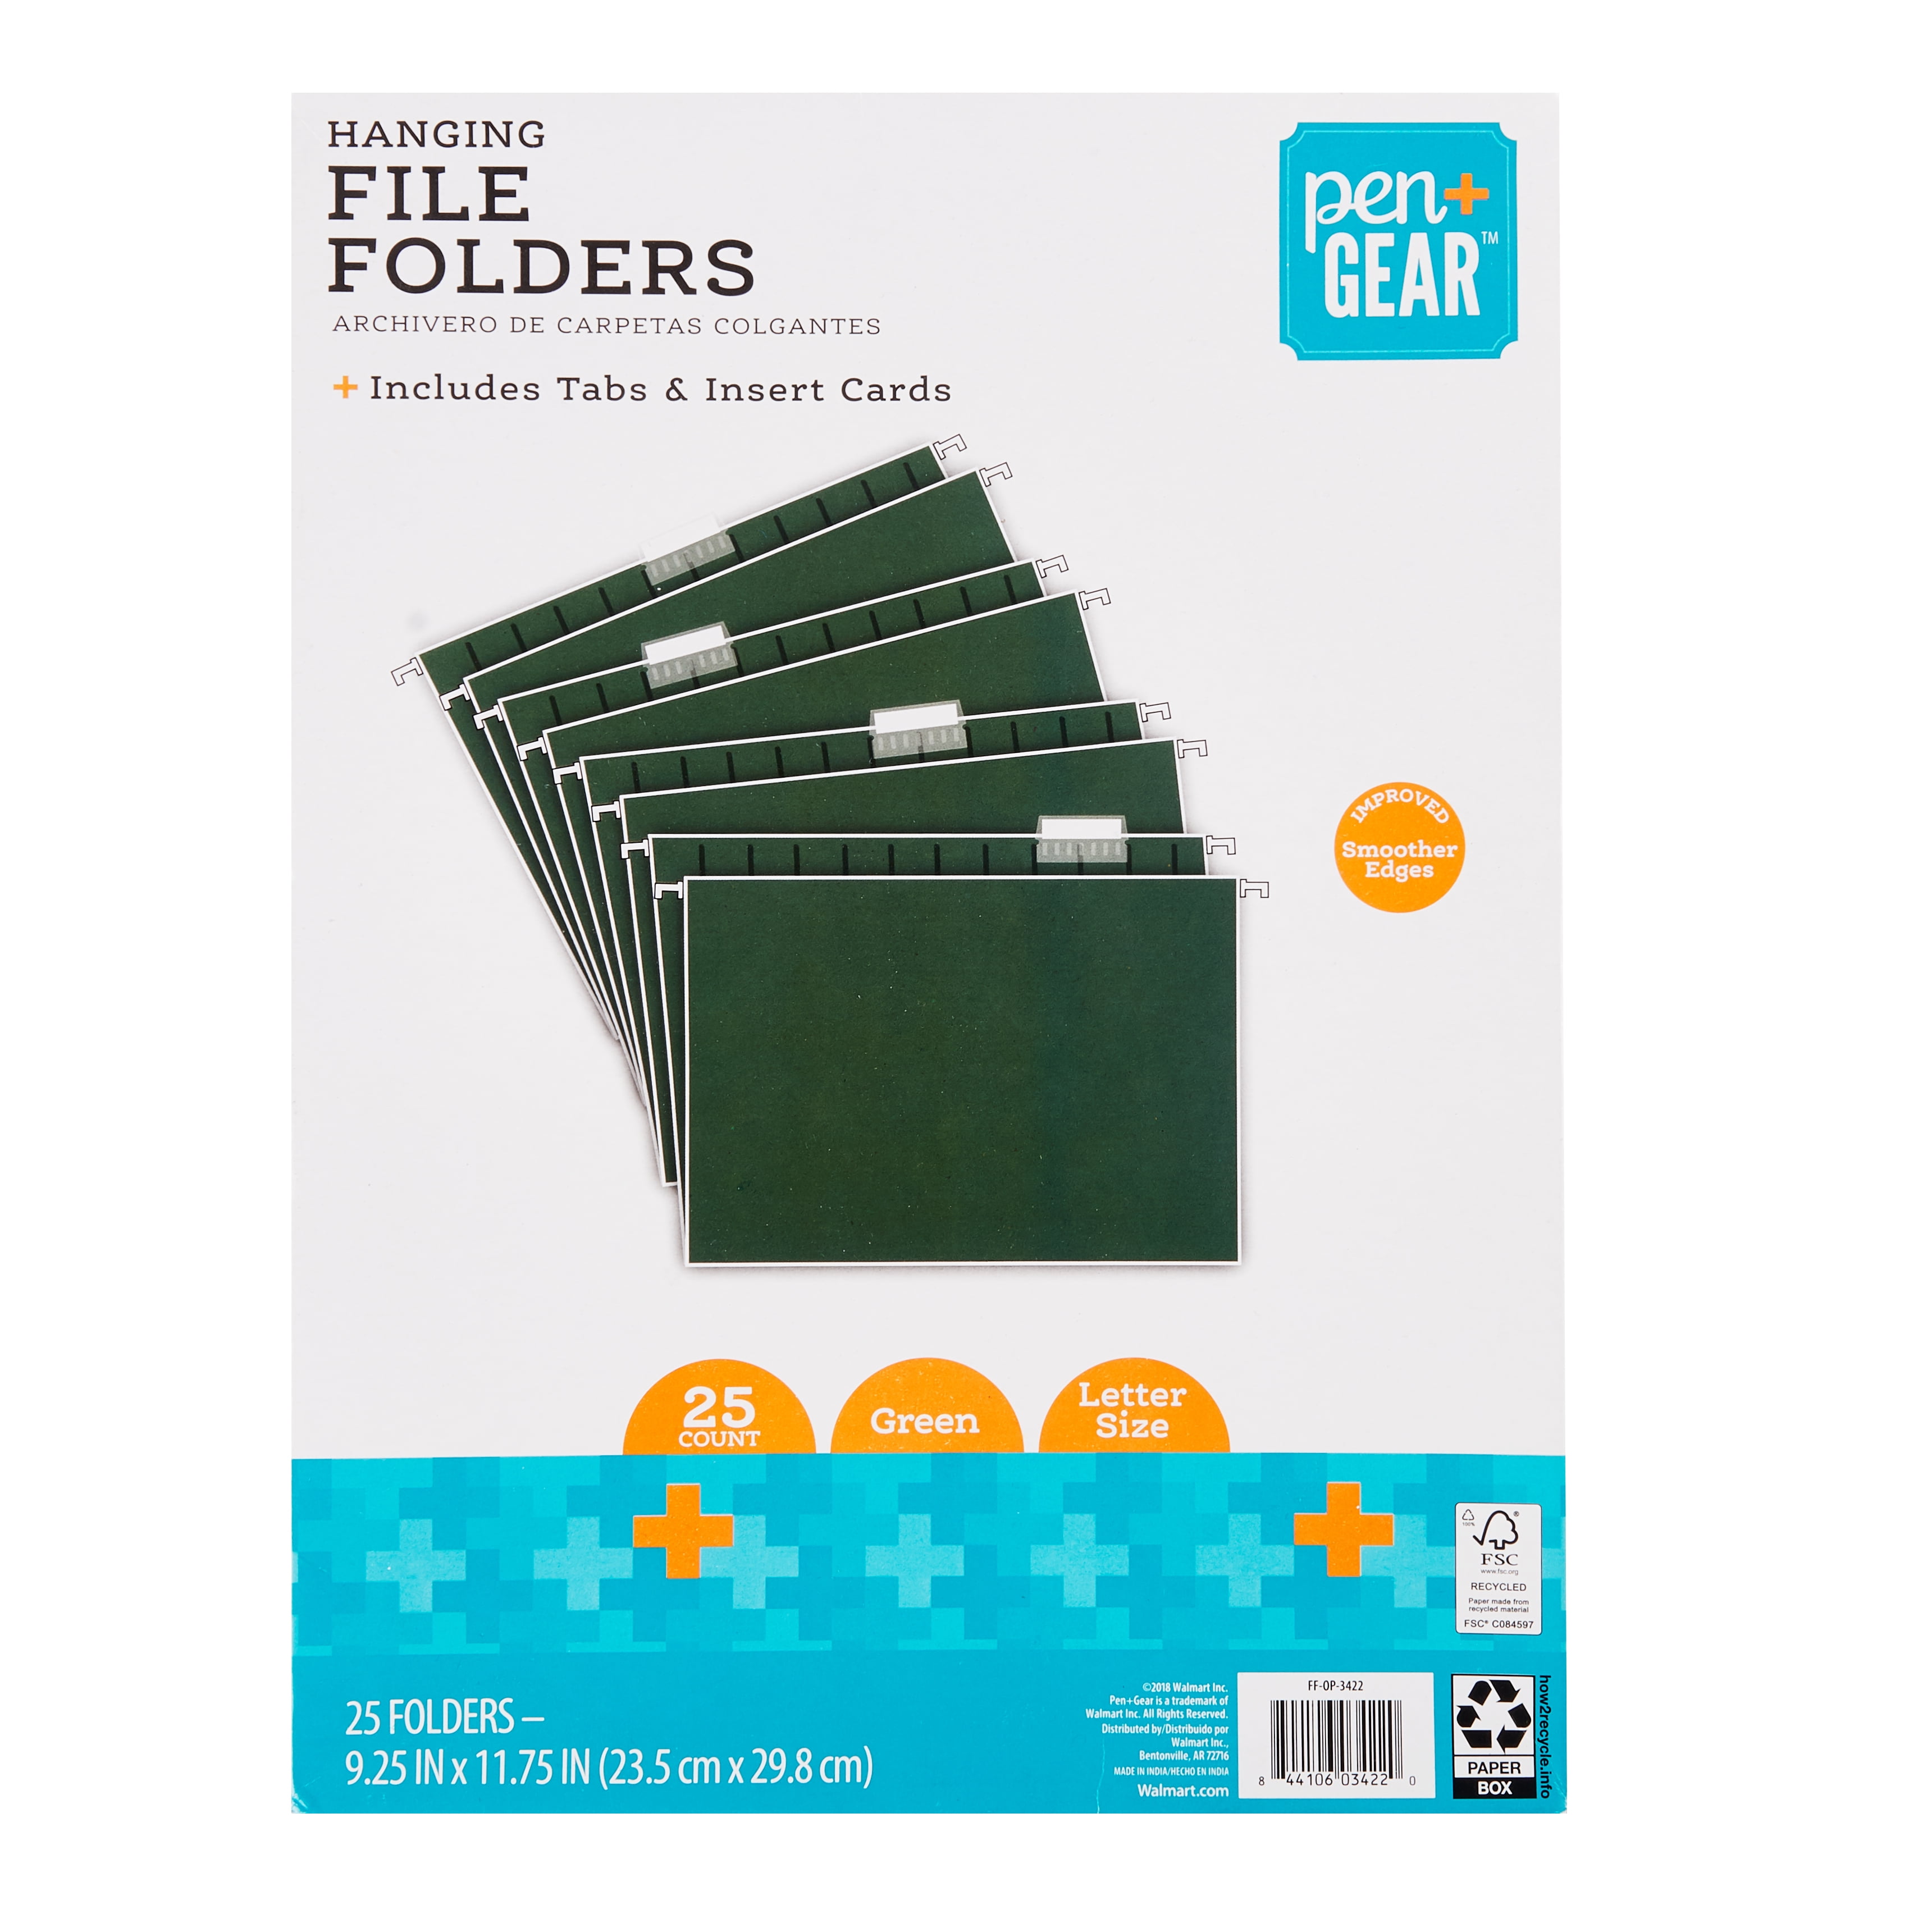 Leather Details about   Hanging File Folders Letter Size 1/5 Adjustable Rose Gold Cut Tabs, 